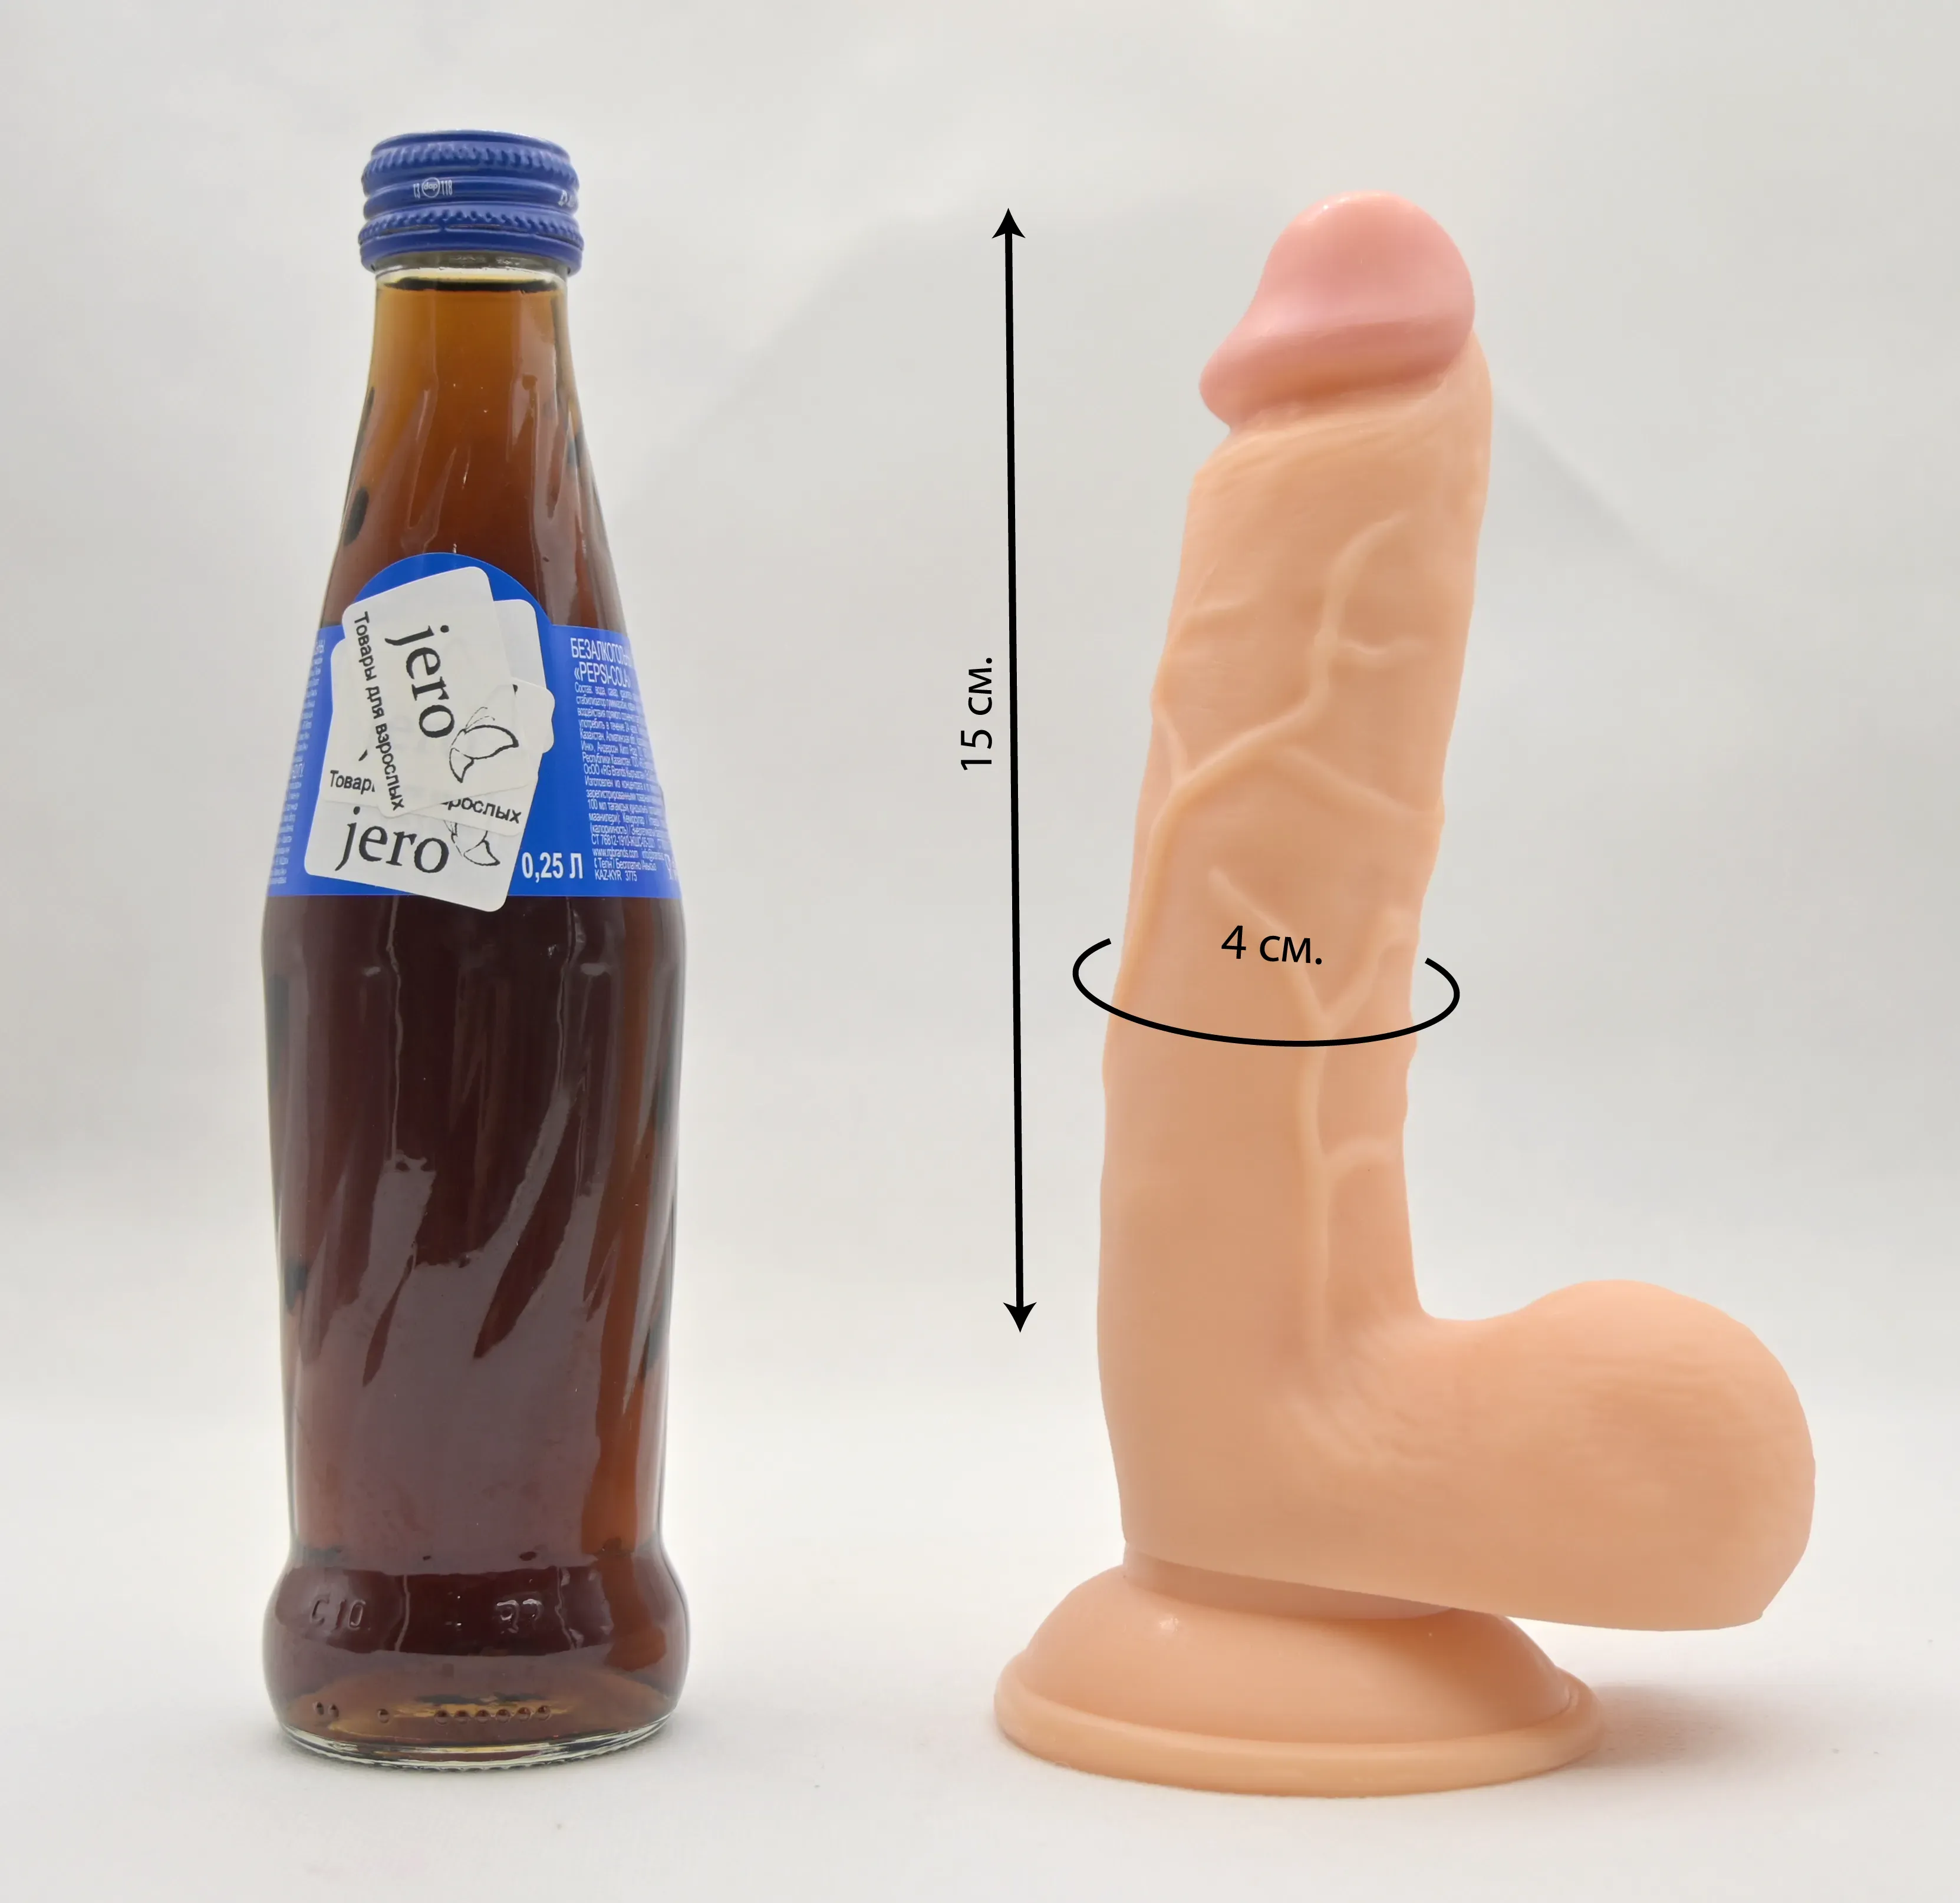 Размеры Realistic 30052 и сравнение с бутылкой пепси